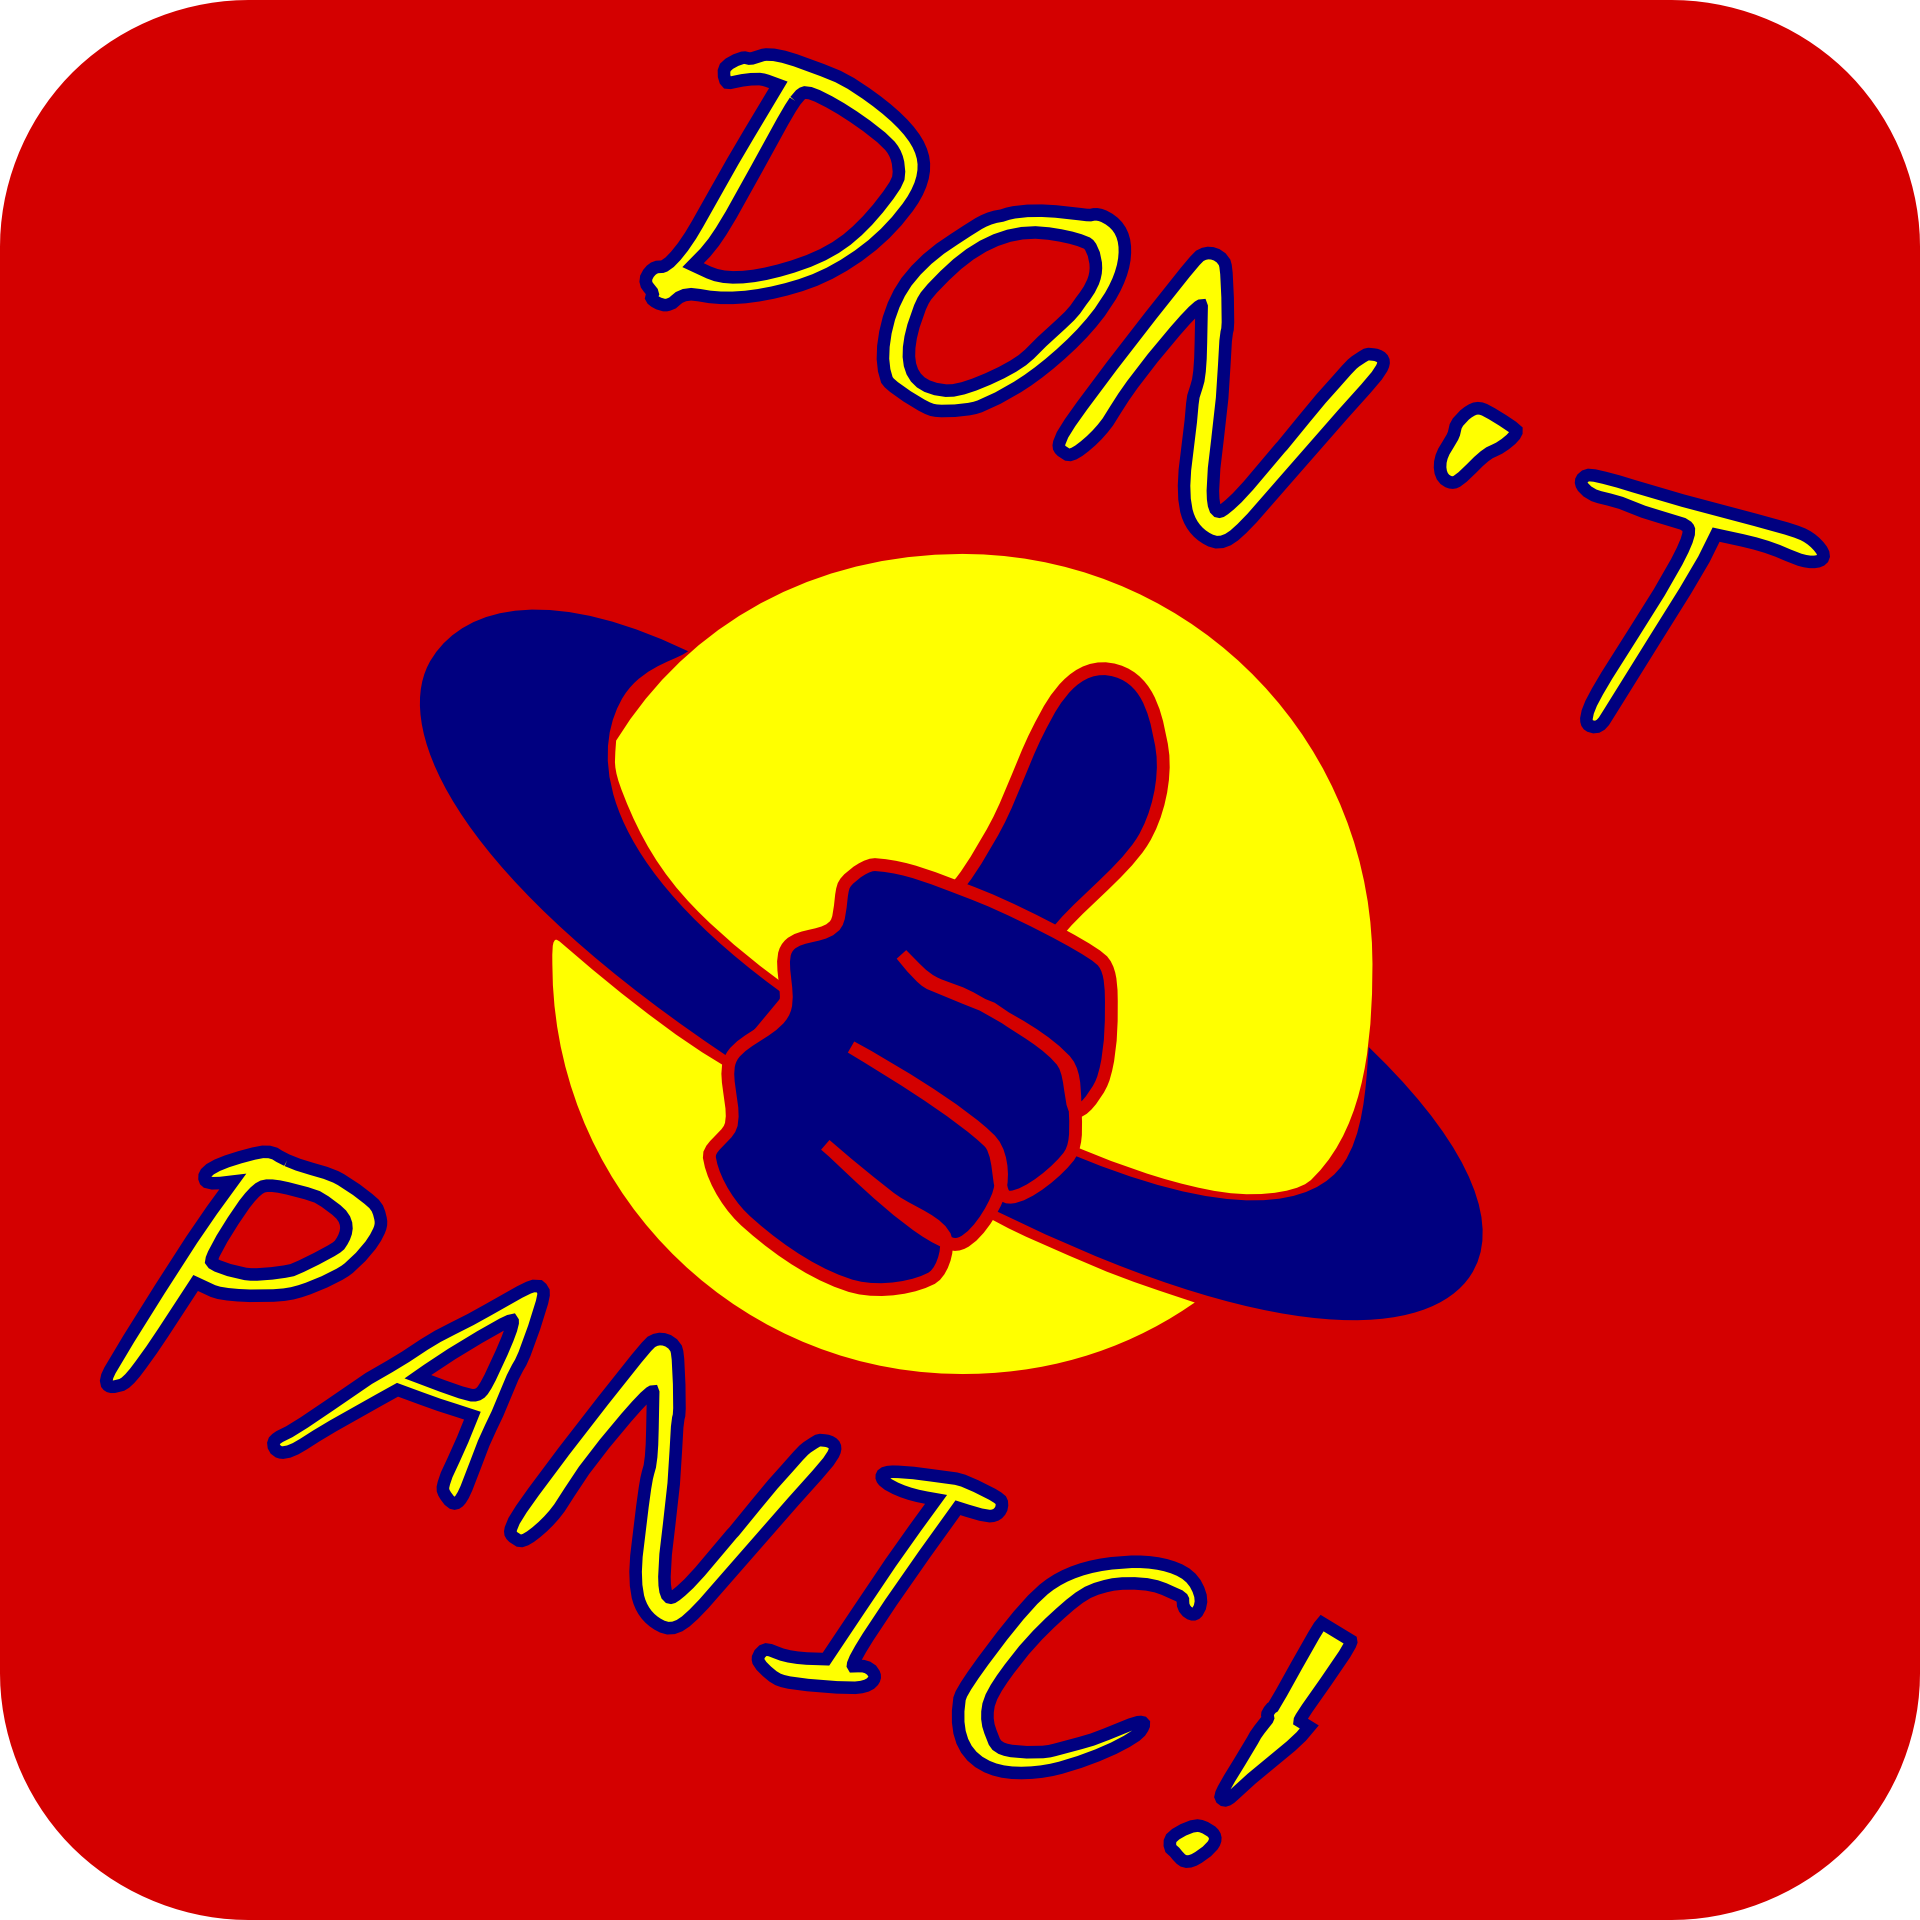 do not panic in busy restaurants